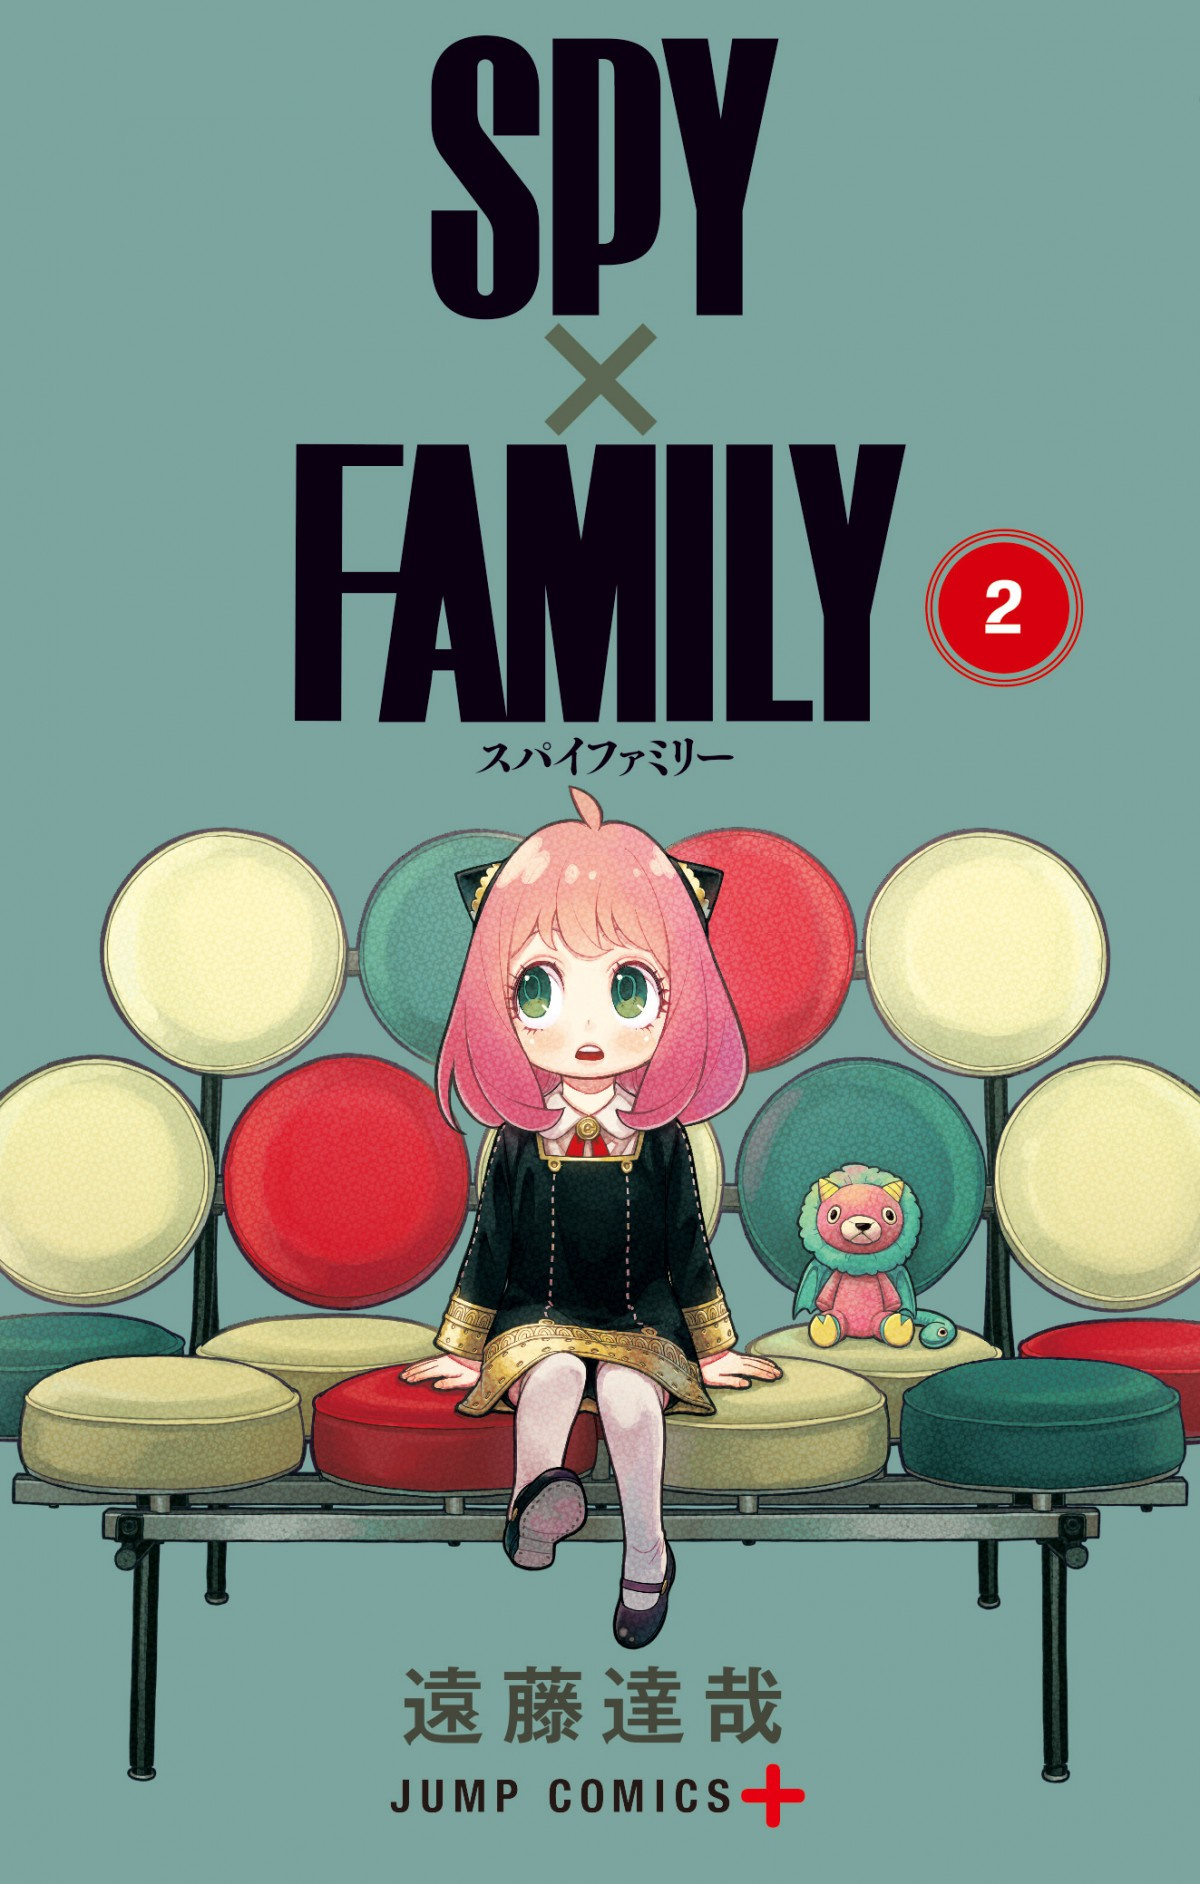 Spy Family コミックス第2巻発売 あっちむいてほい 企画実施も勝率0 2 の難関 Oricon News